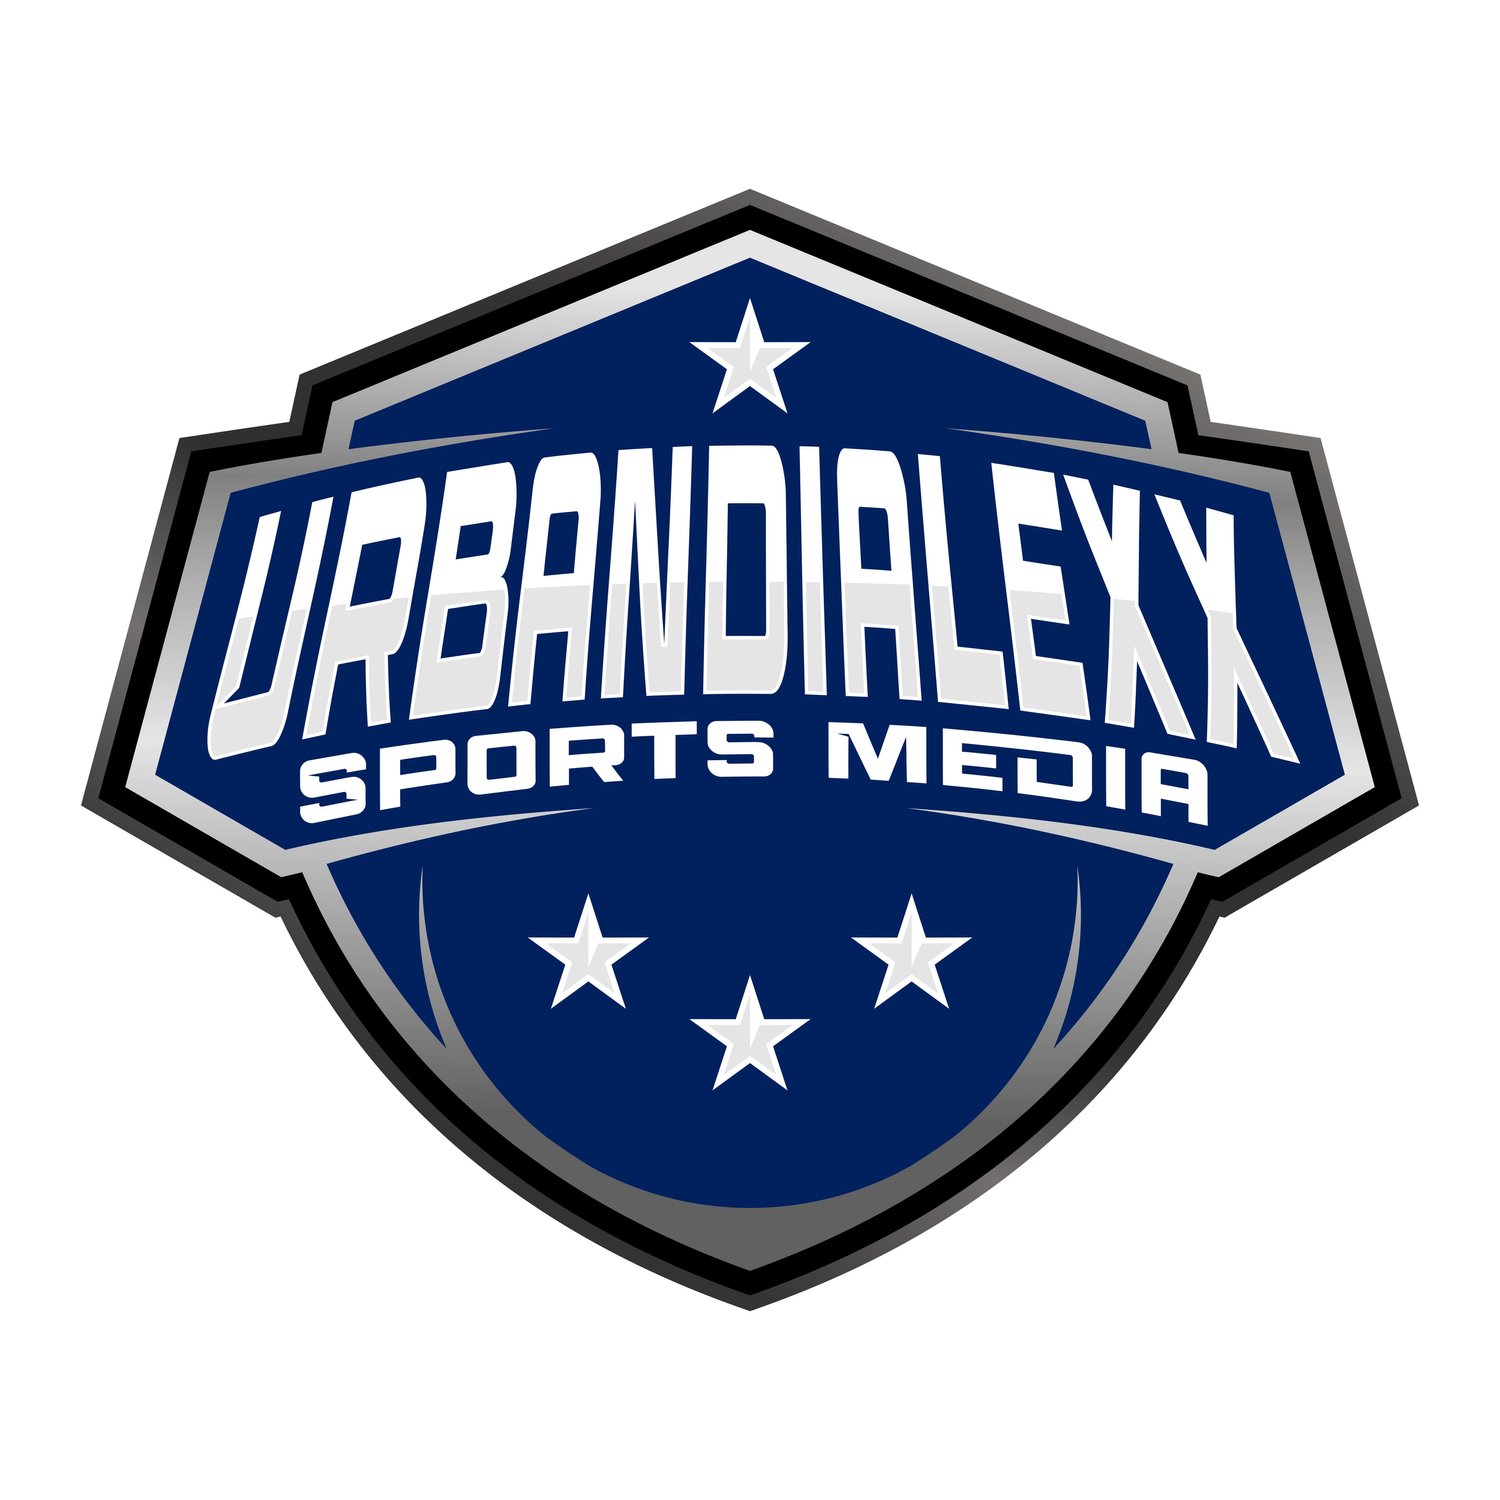 Urbandialexxsportsmedia